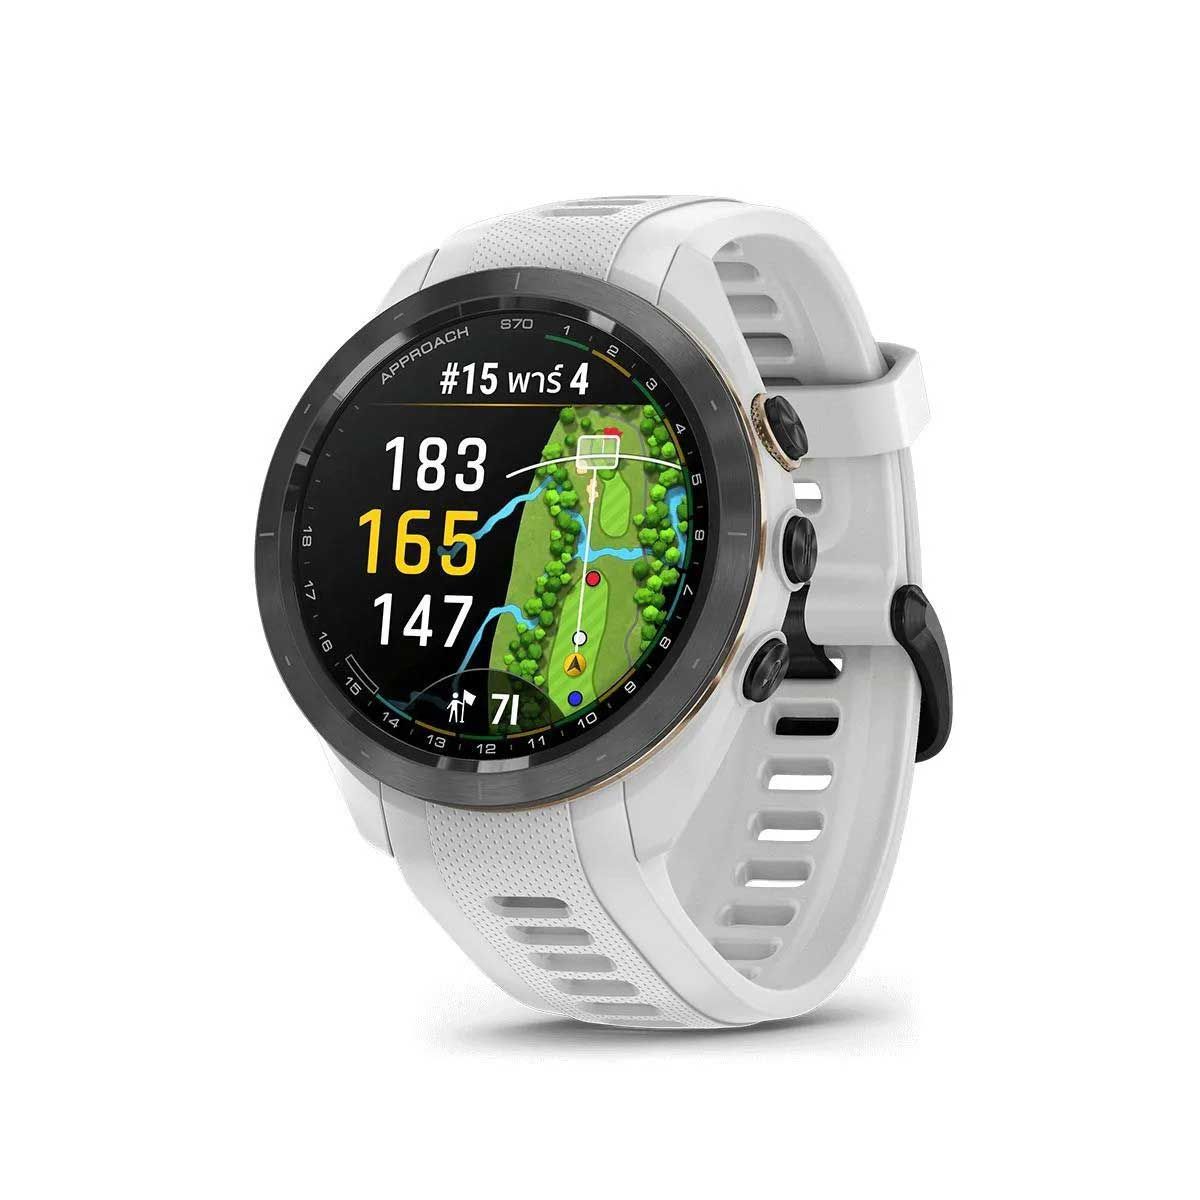 GARMIN Smart Watch รุ่น Approach S70 - 42 mm Black  White